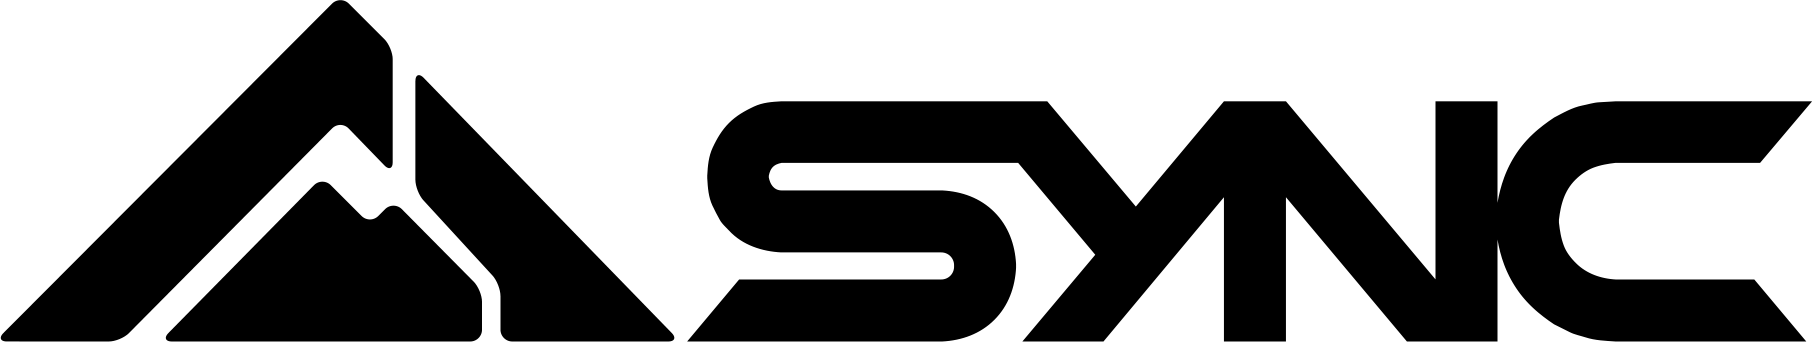 sync-logo-horizontal.png